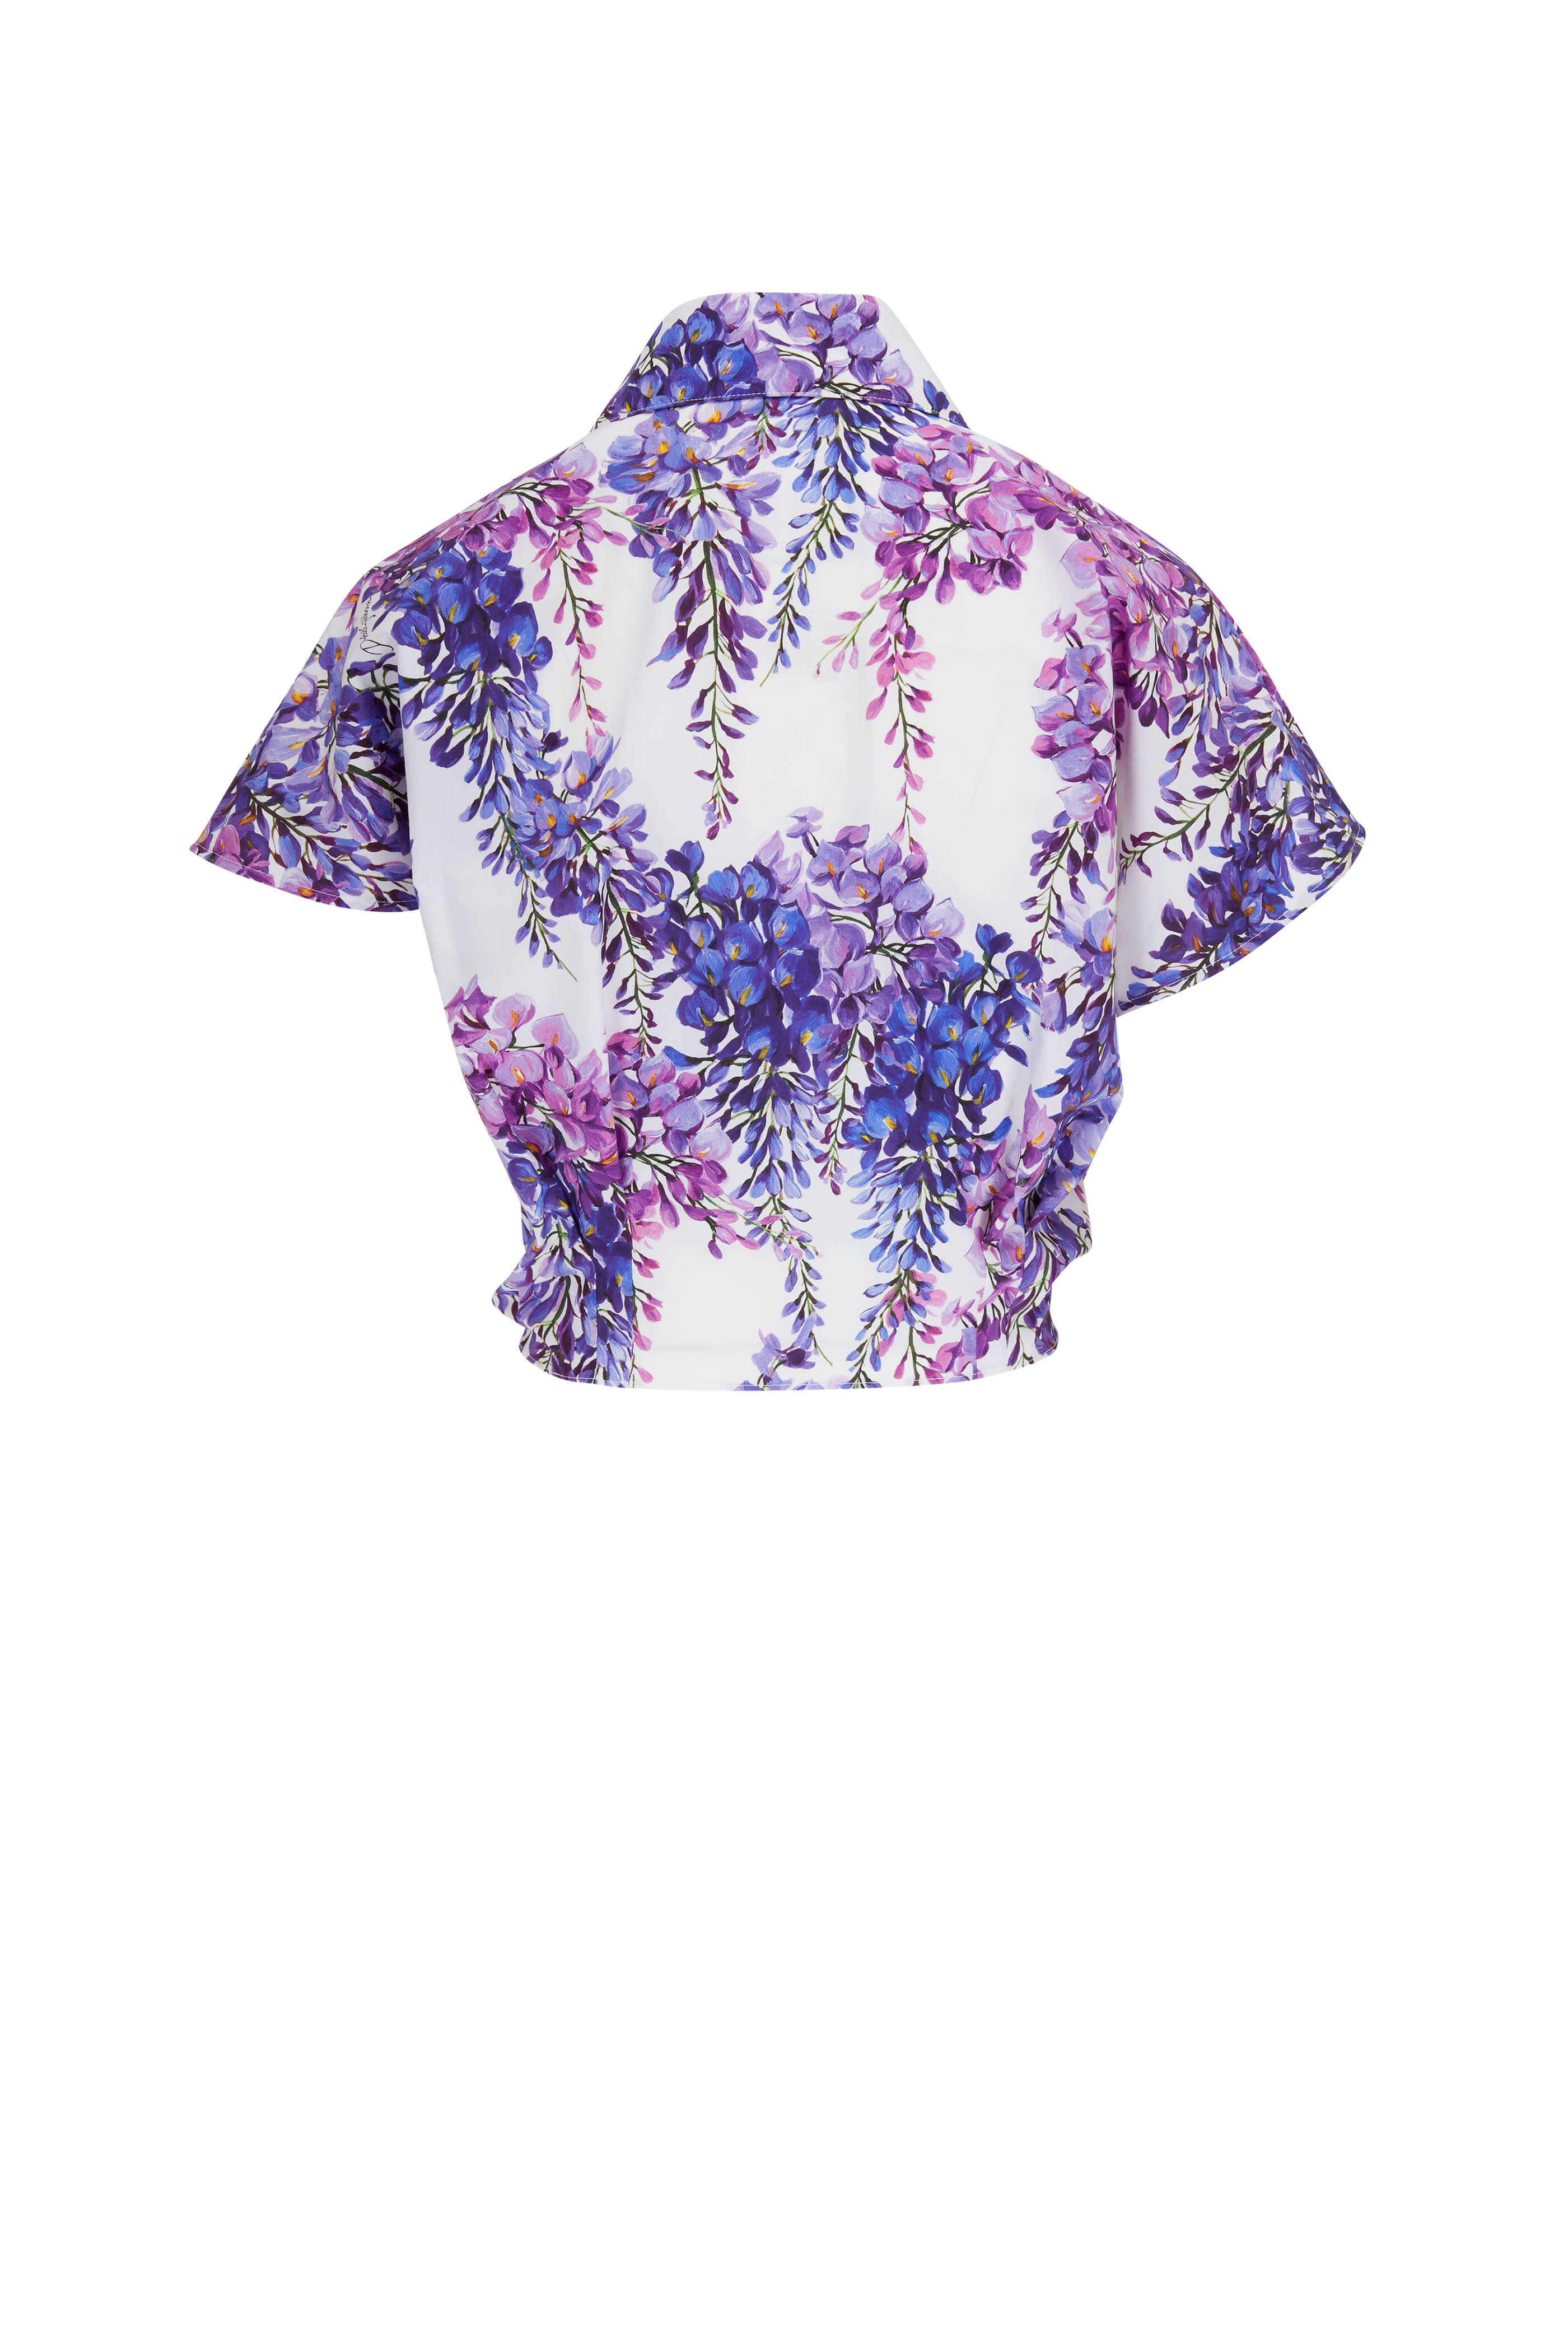 Dolce & Gabbana - Purple & White Wisteria Print Crop Top